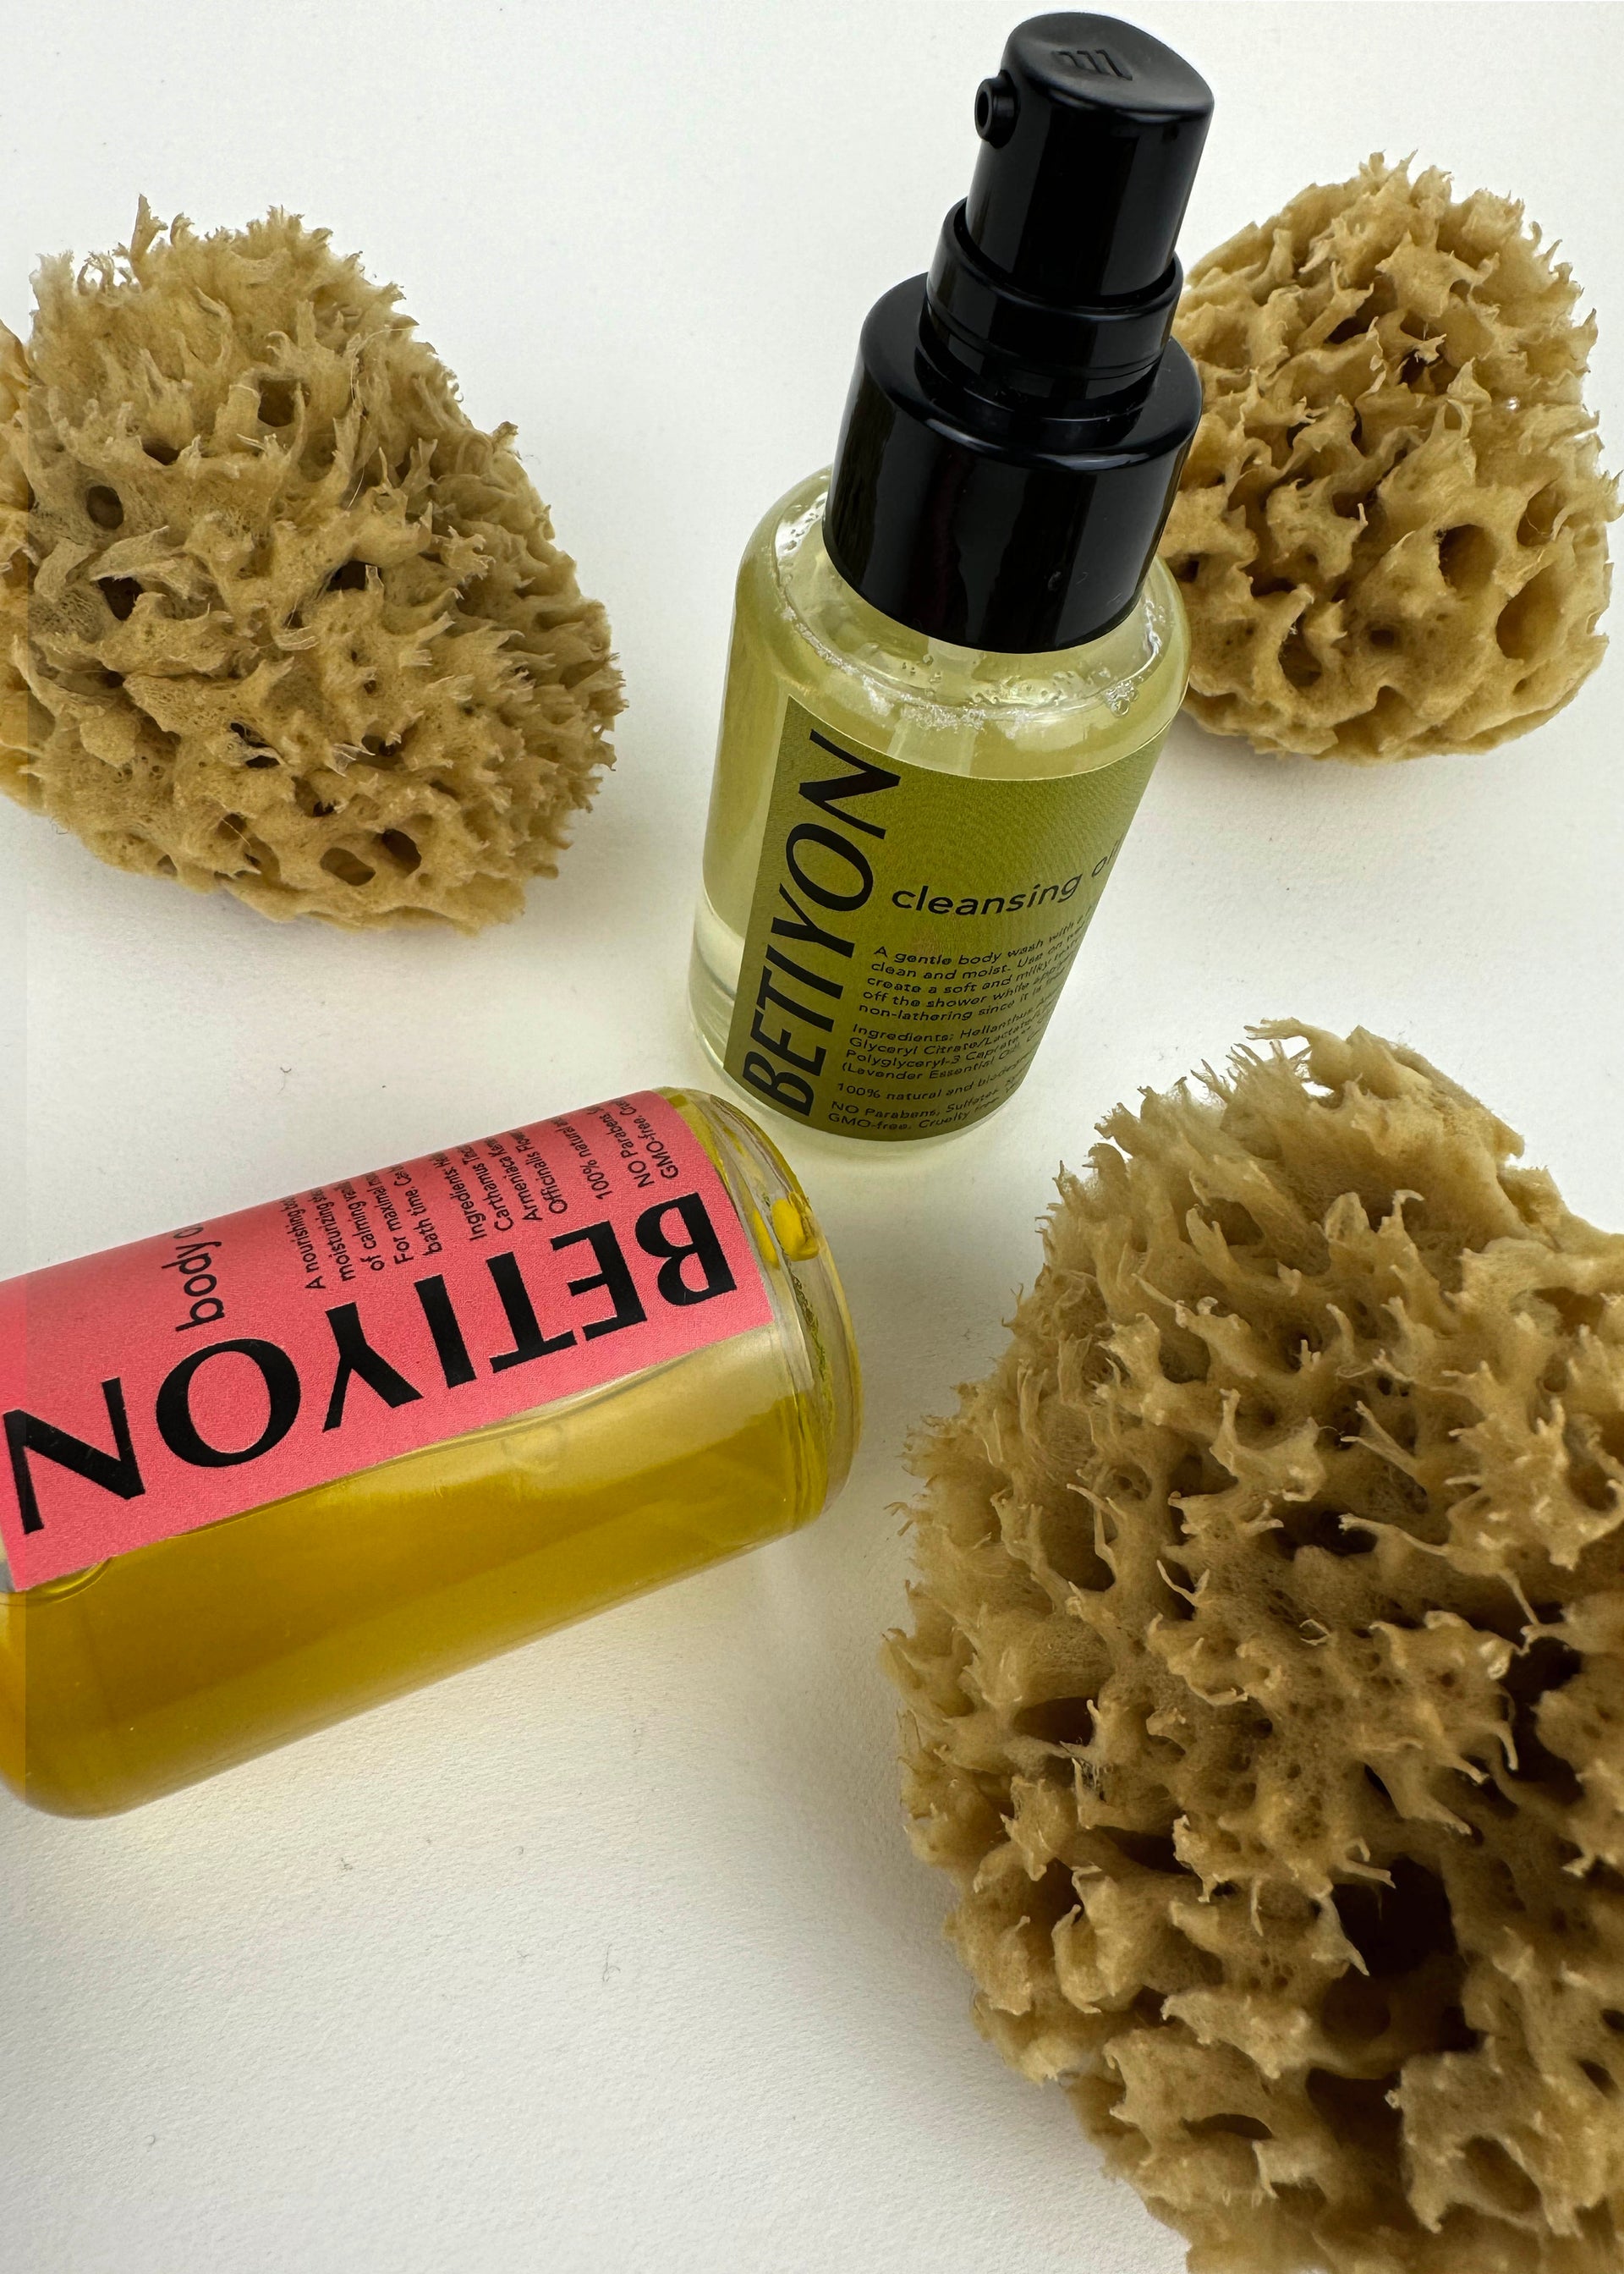 Body Oil, Cleansing Oil + Sea Sponge